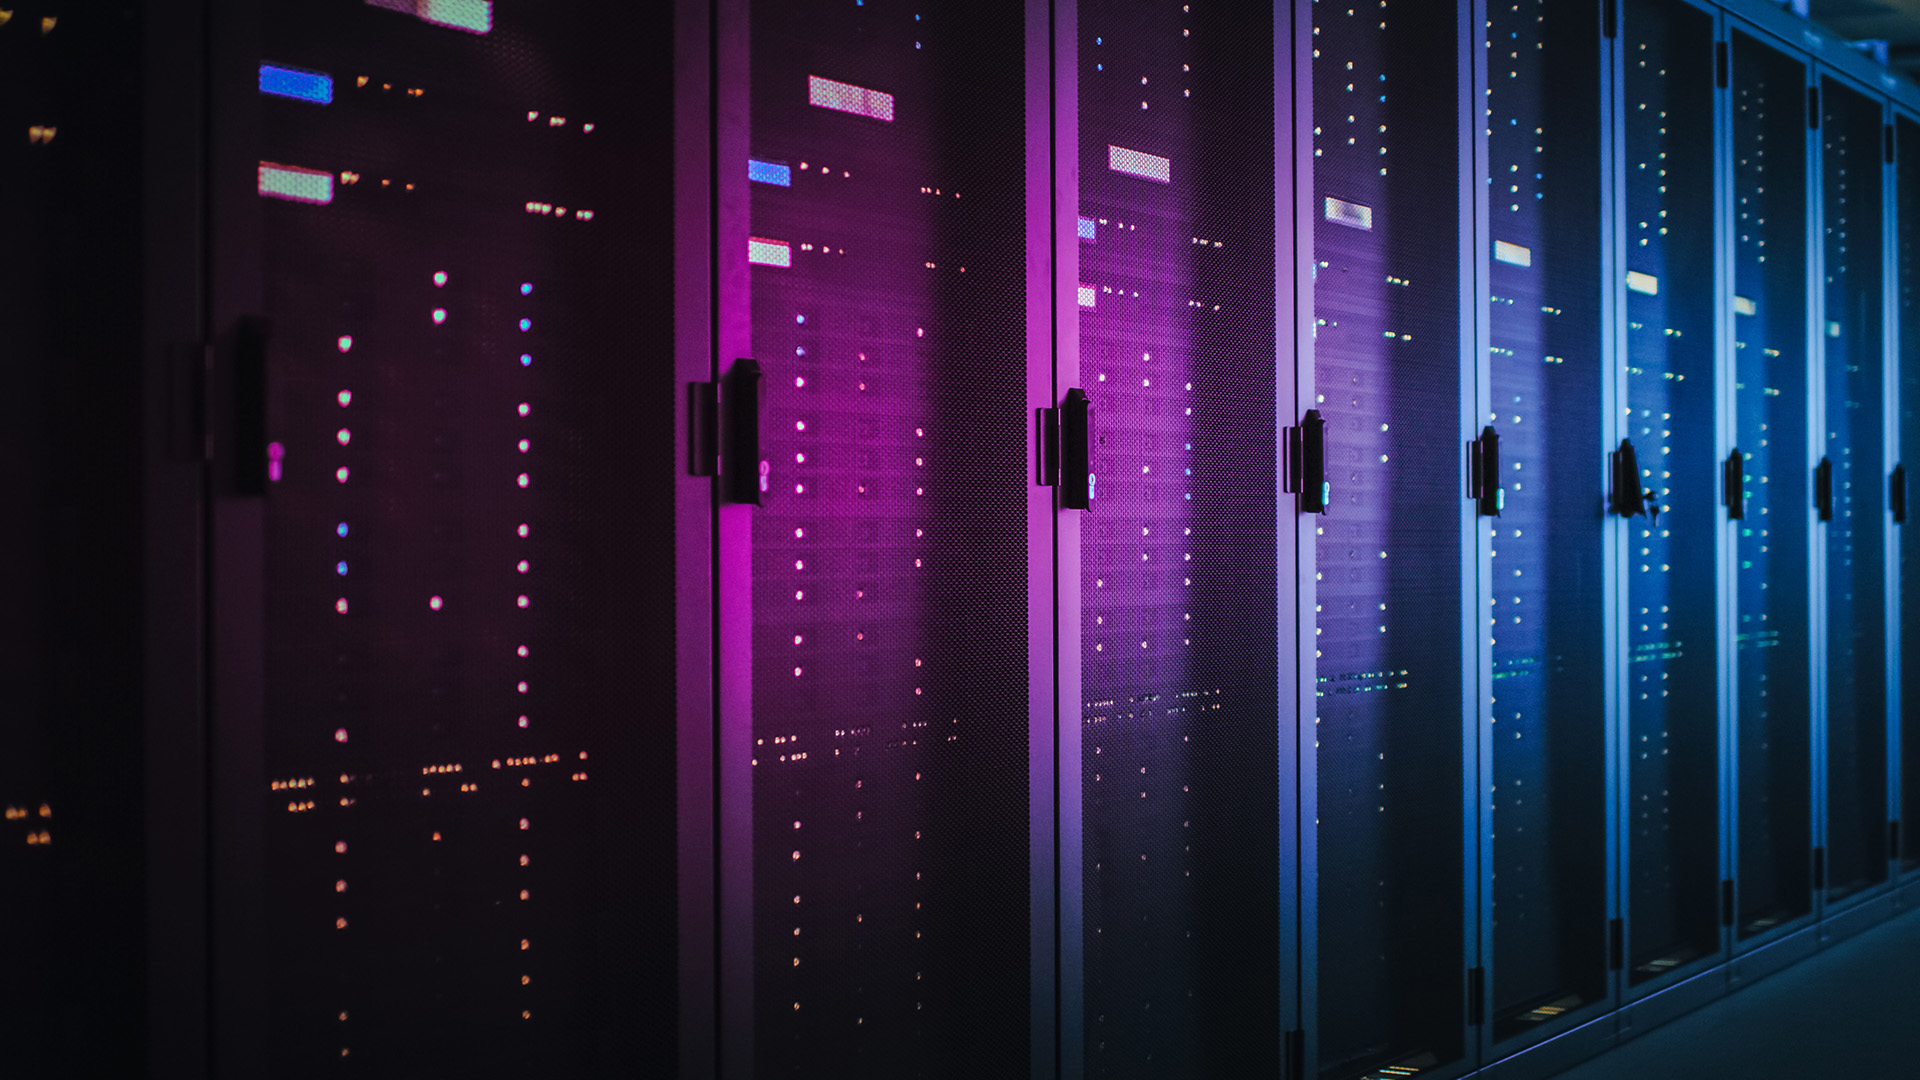 Dark data center with multiple rows of fully operational server racks